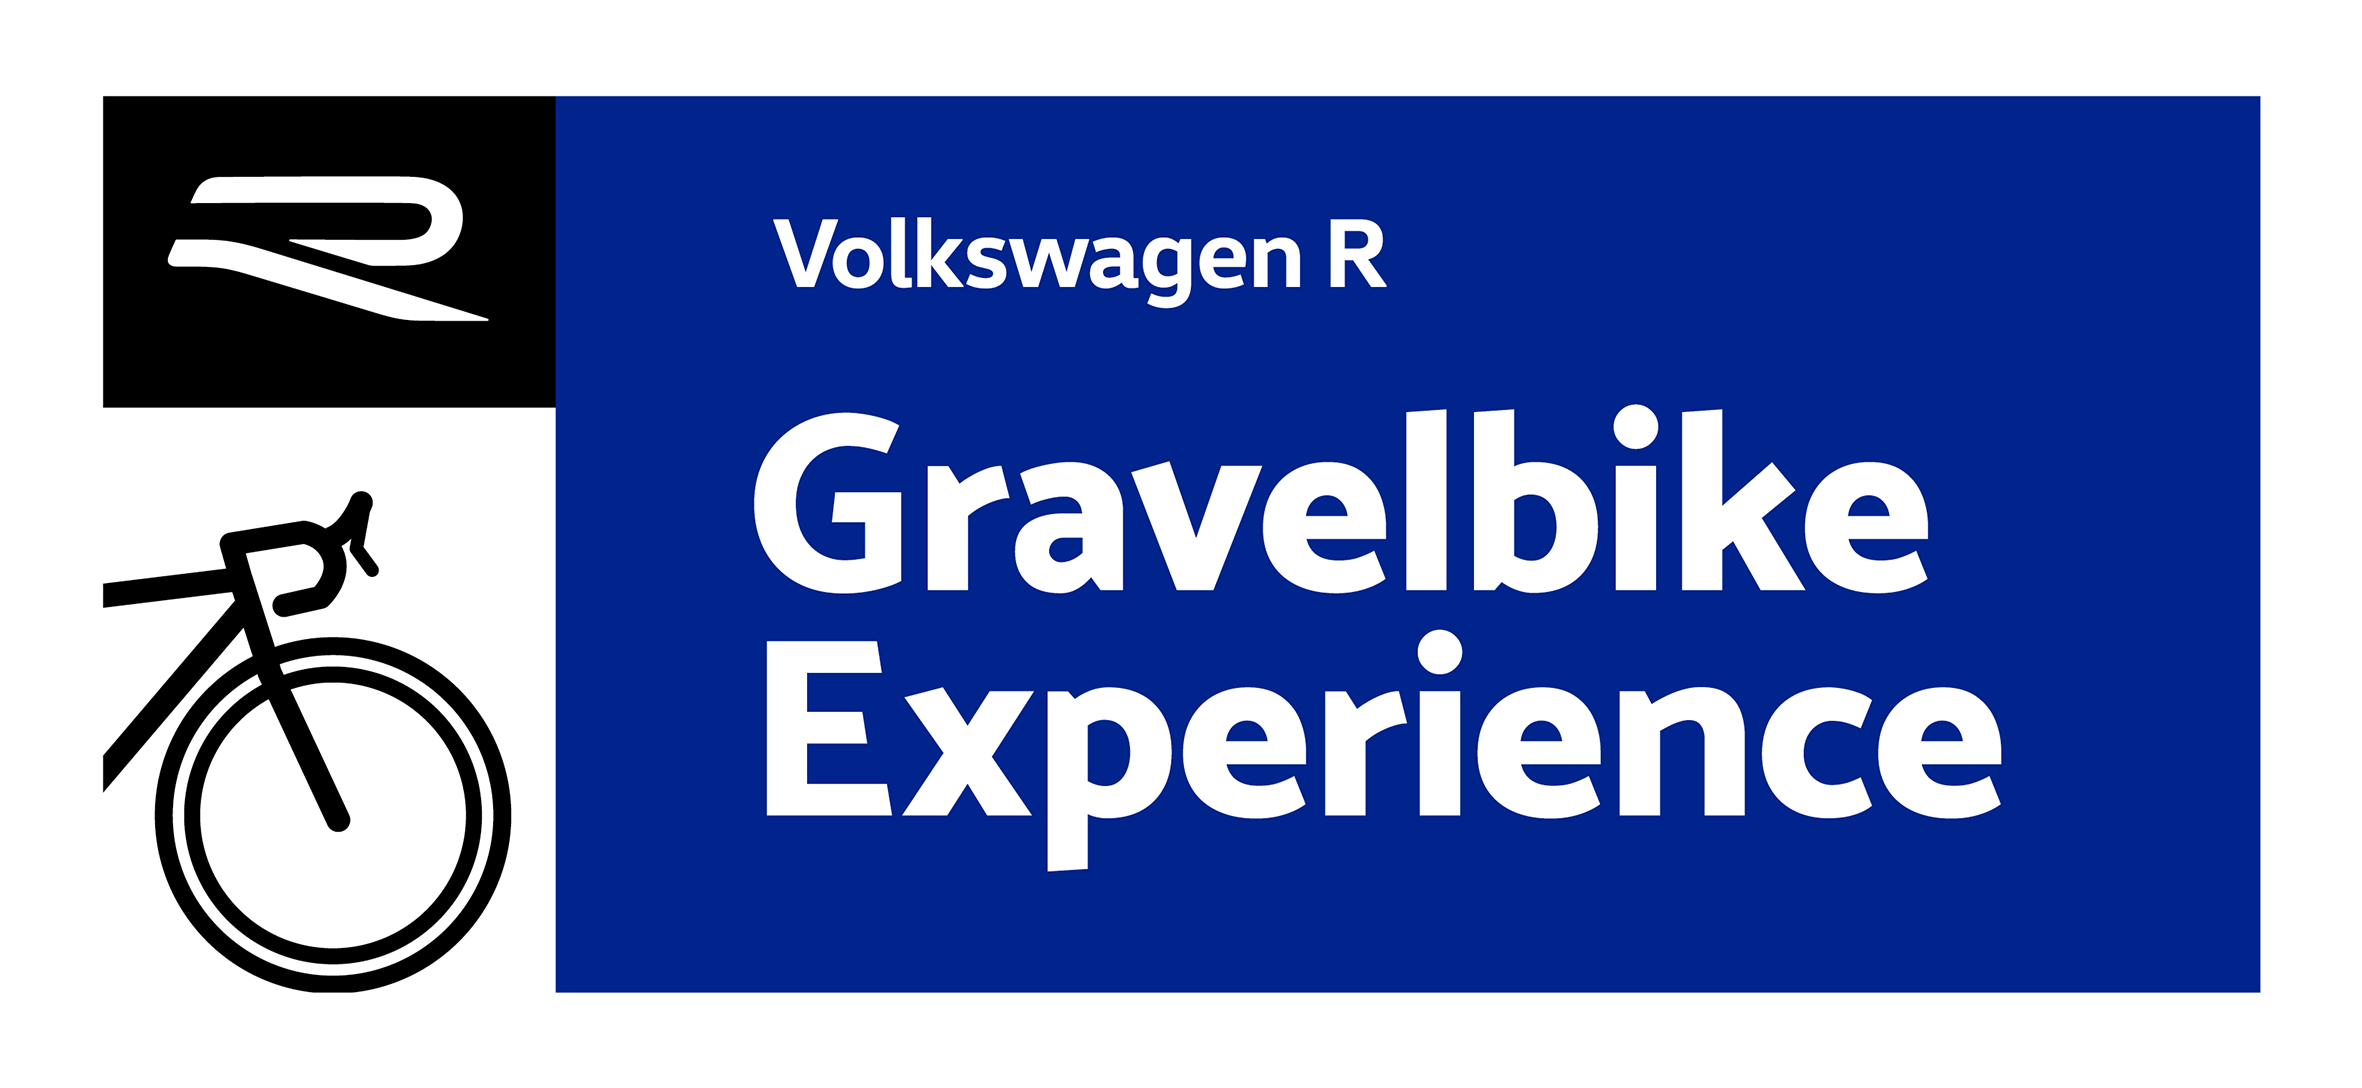 Volkswagen R Gravelbike Experience